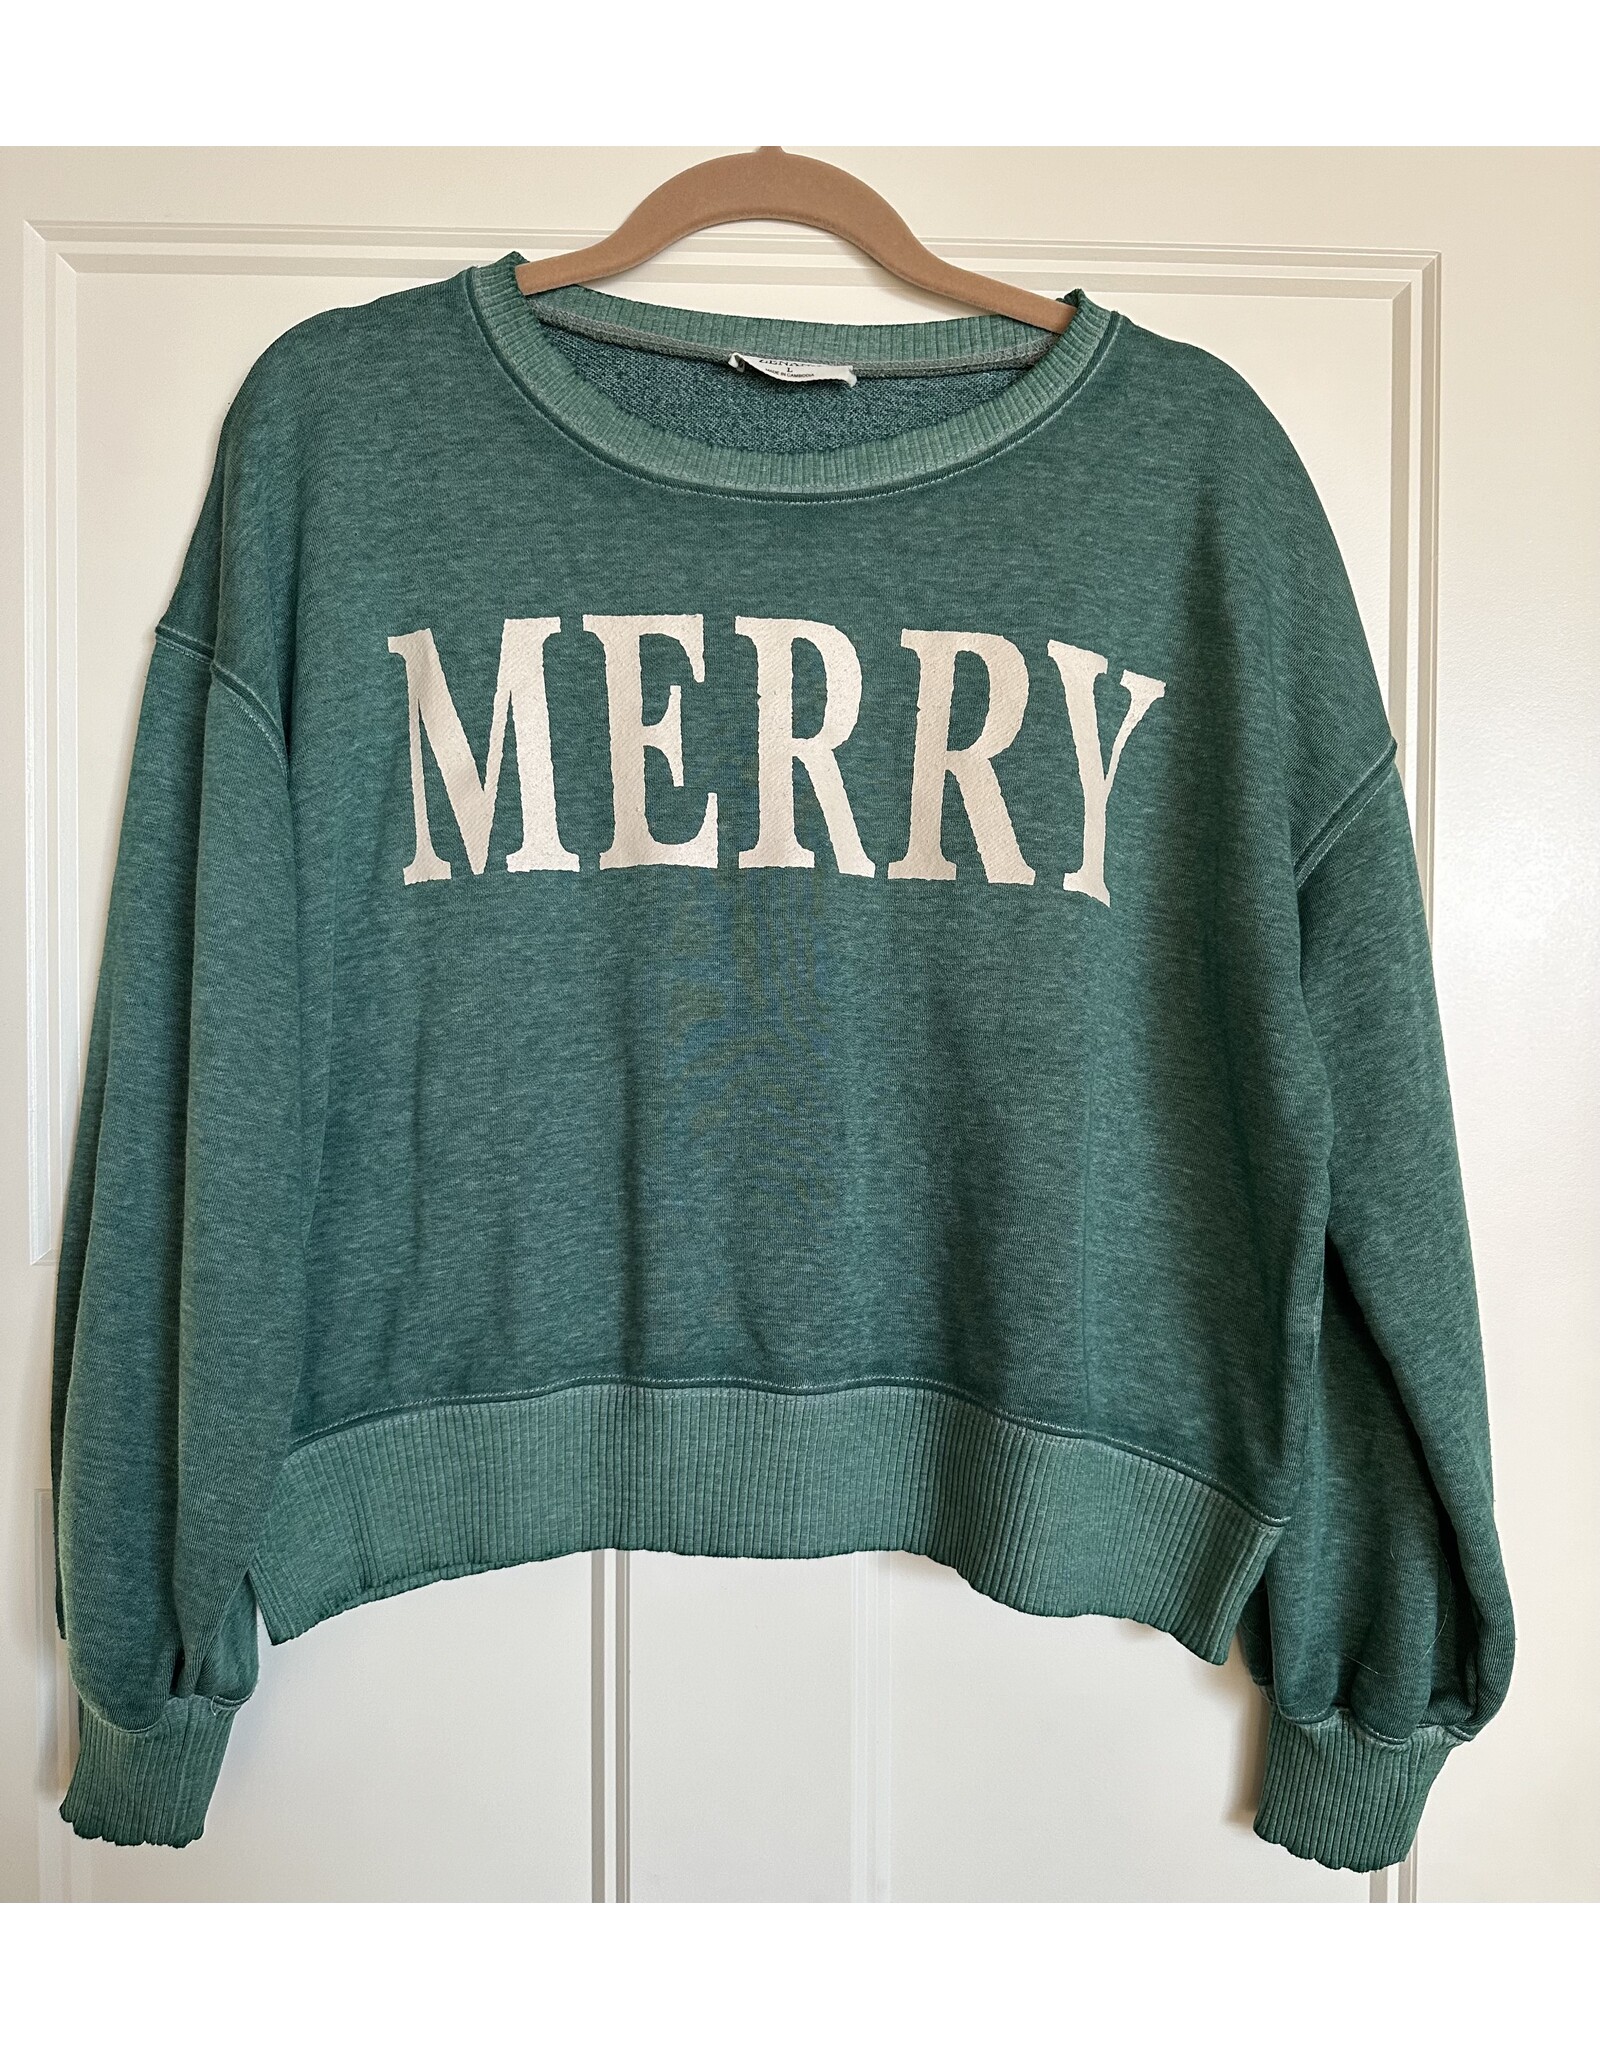 LATA MERRY sweatshirt